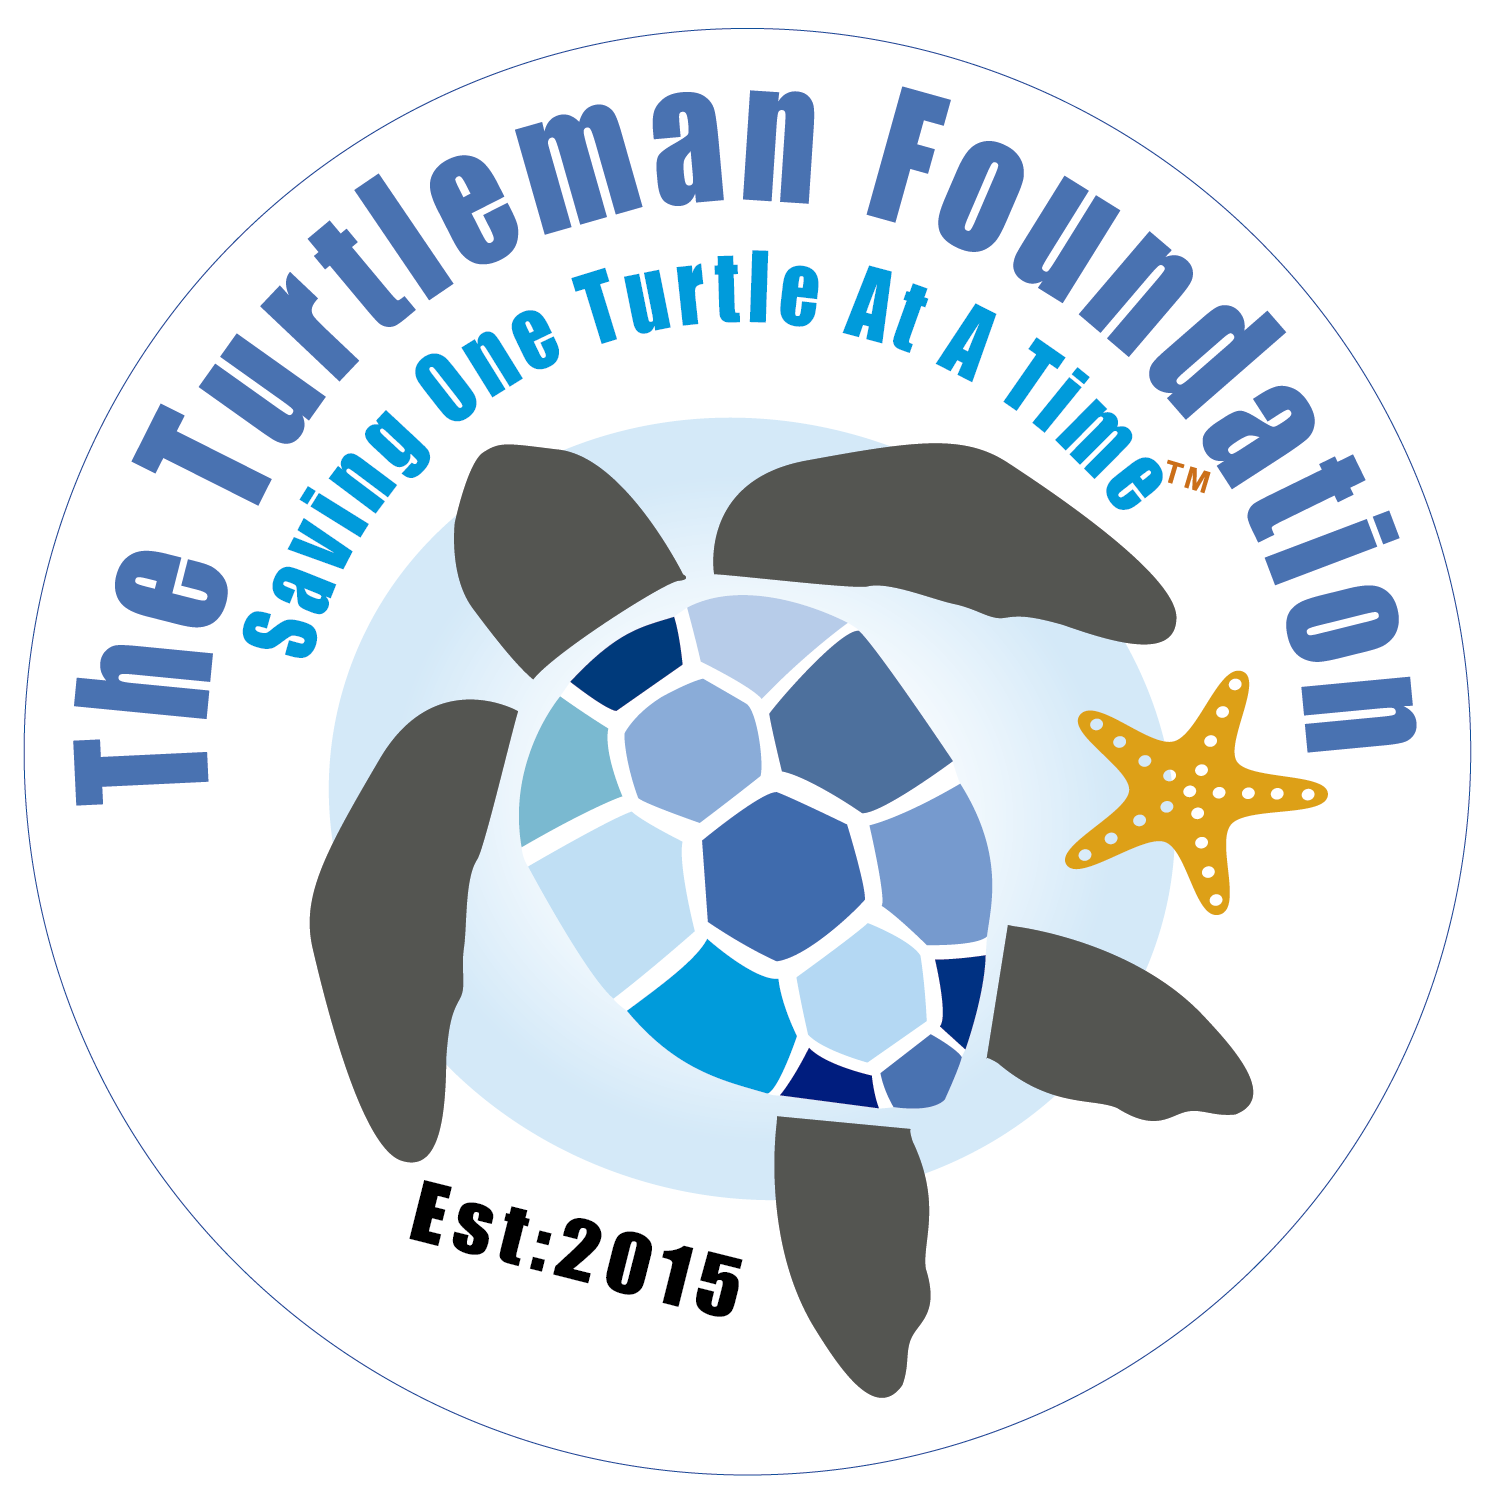 The Turtleman Foundation